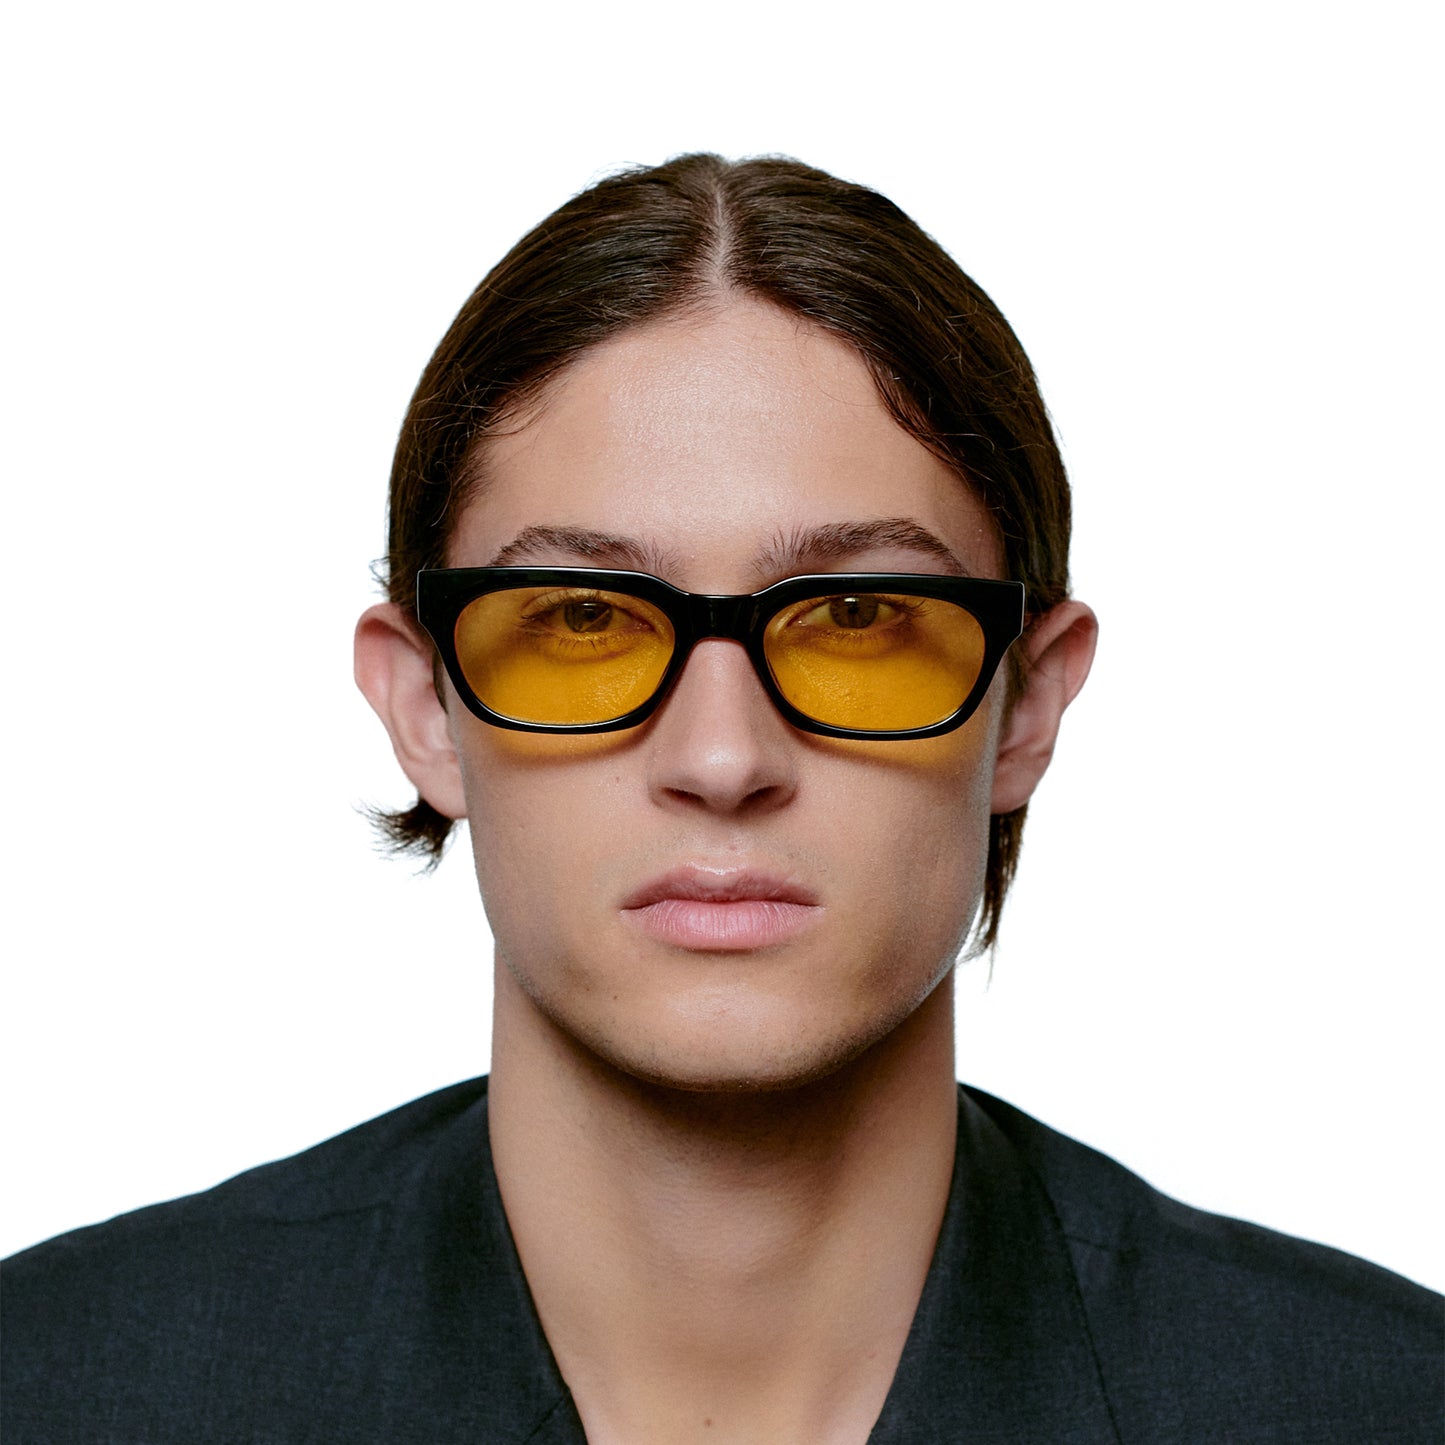 A.Kjaerbede Bror Sunglasses in Black & Yellow color